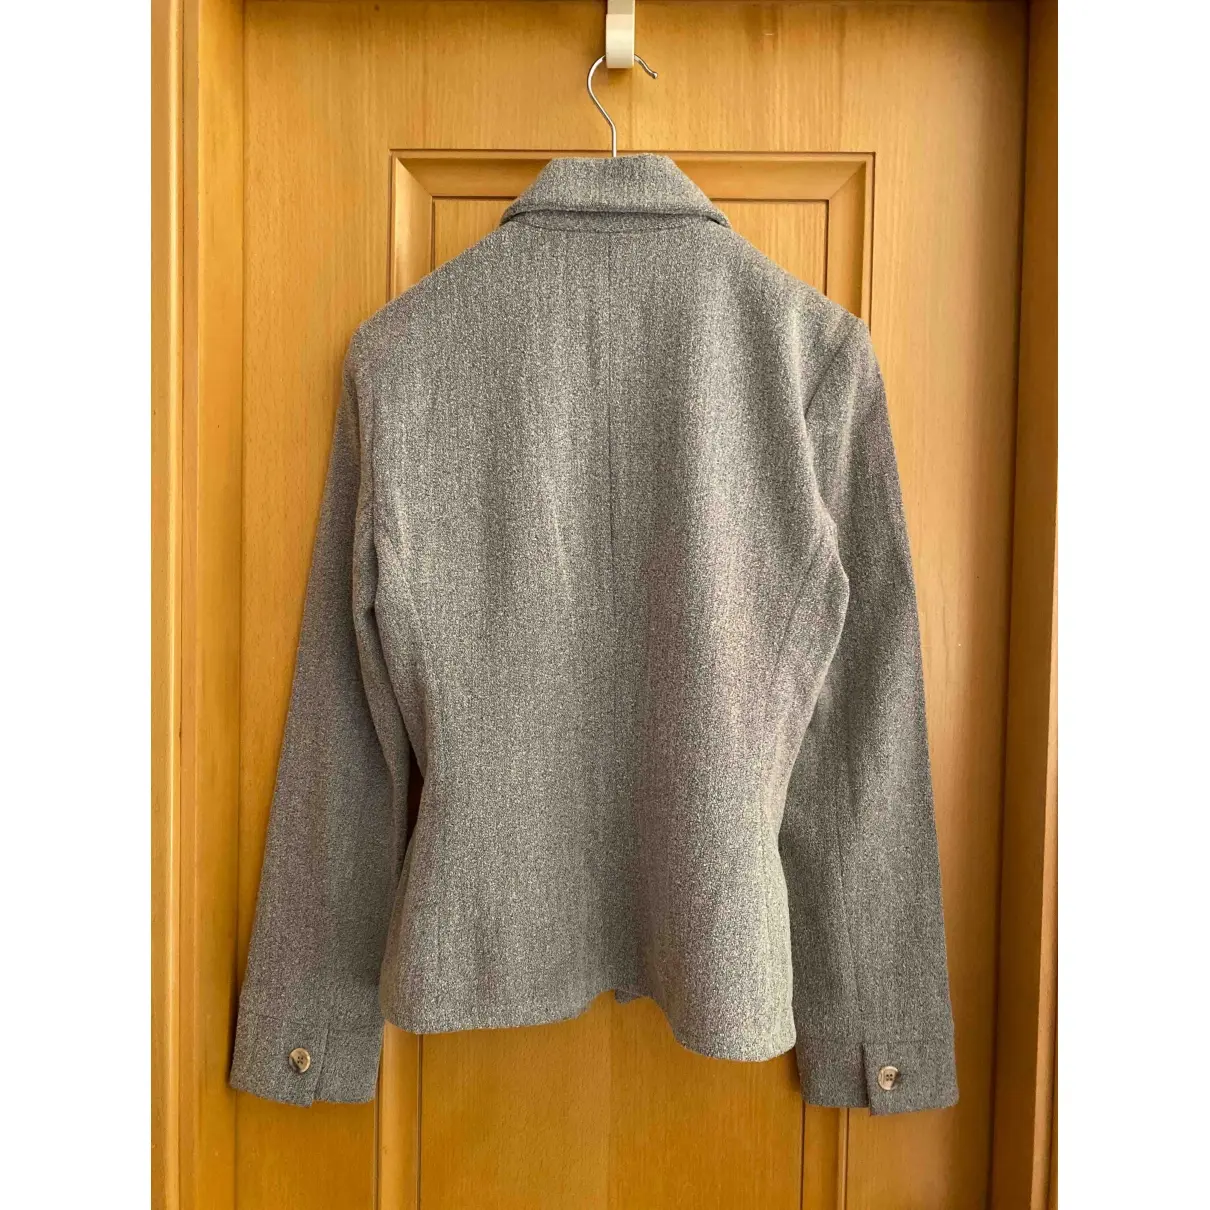 Emporio Armani Wool jacket for sale - Vintage